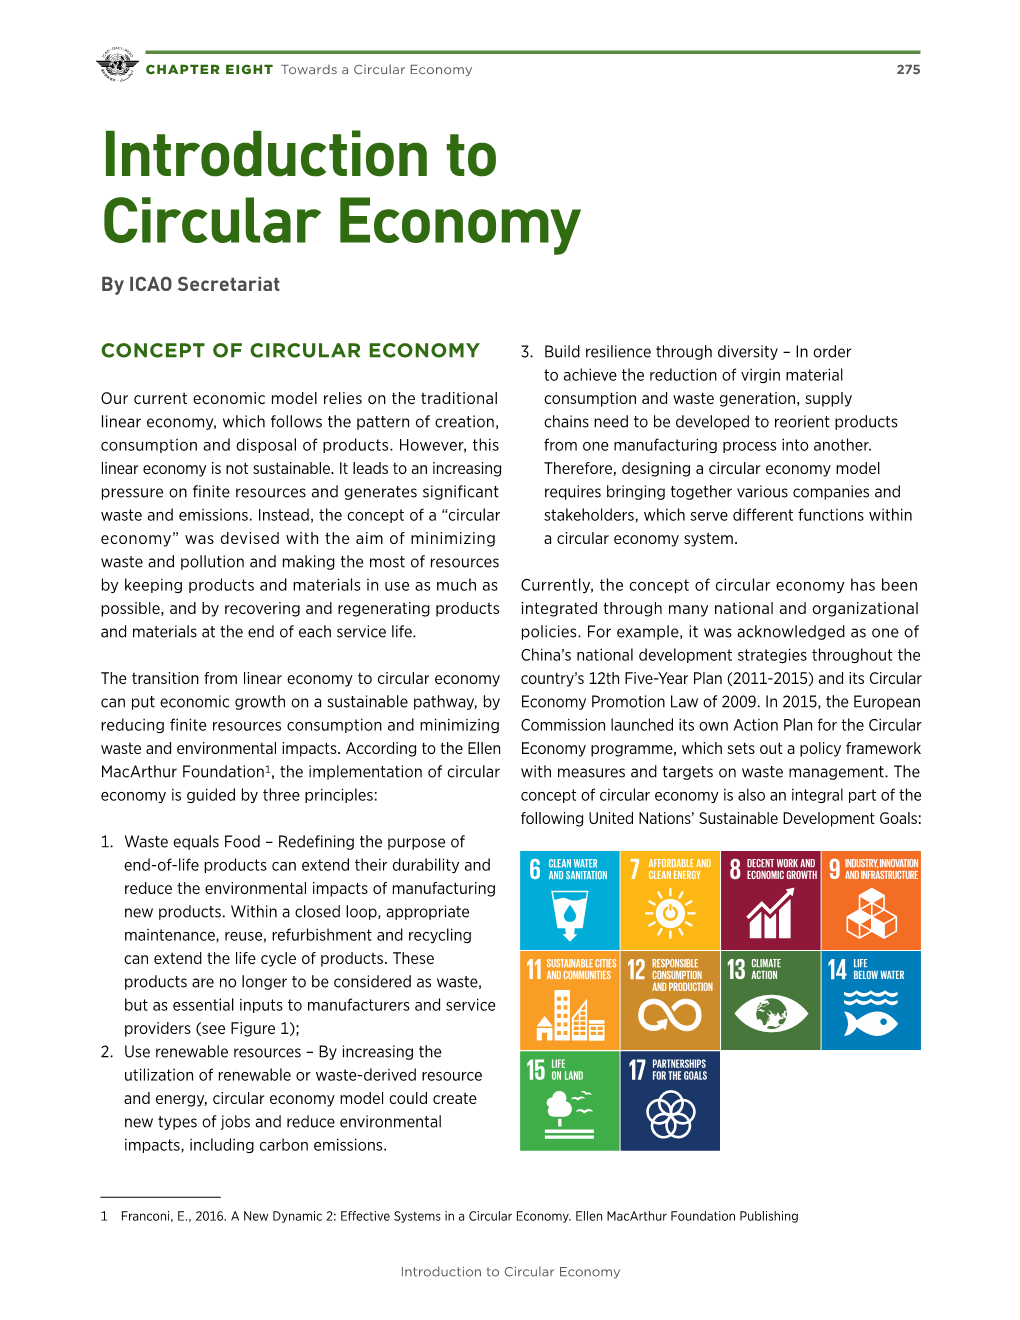 Introduction to Circular Economy by ICAO Secretariat